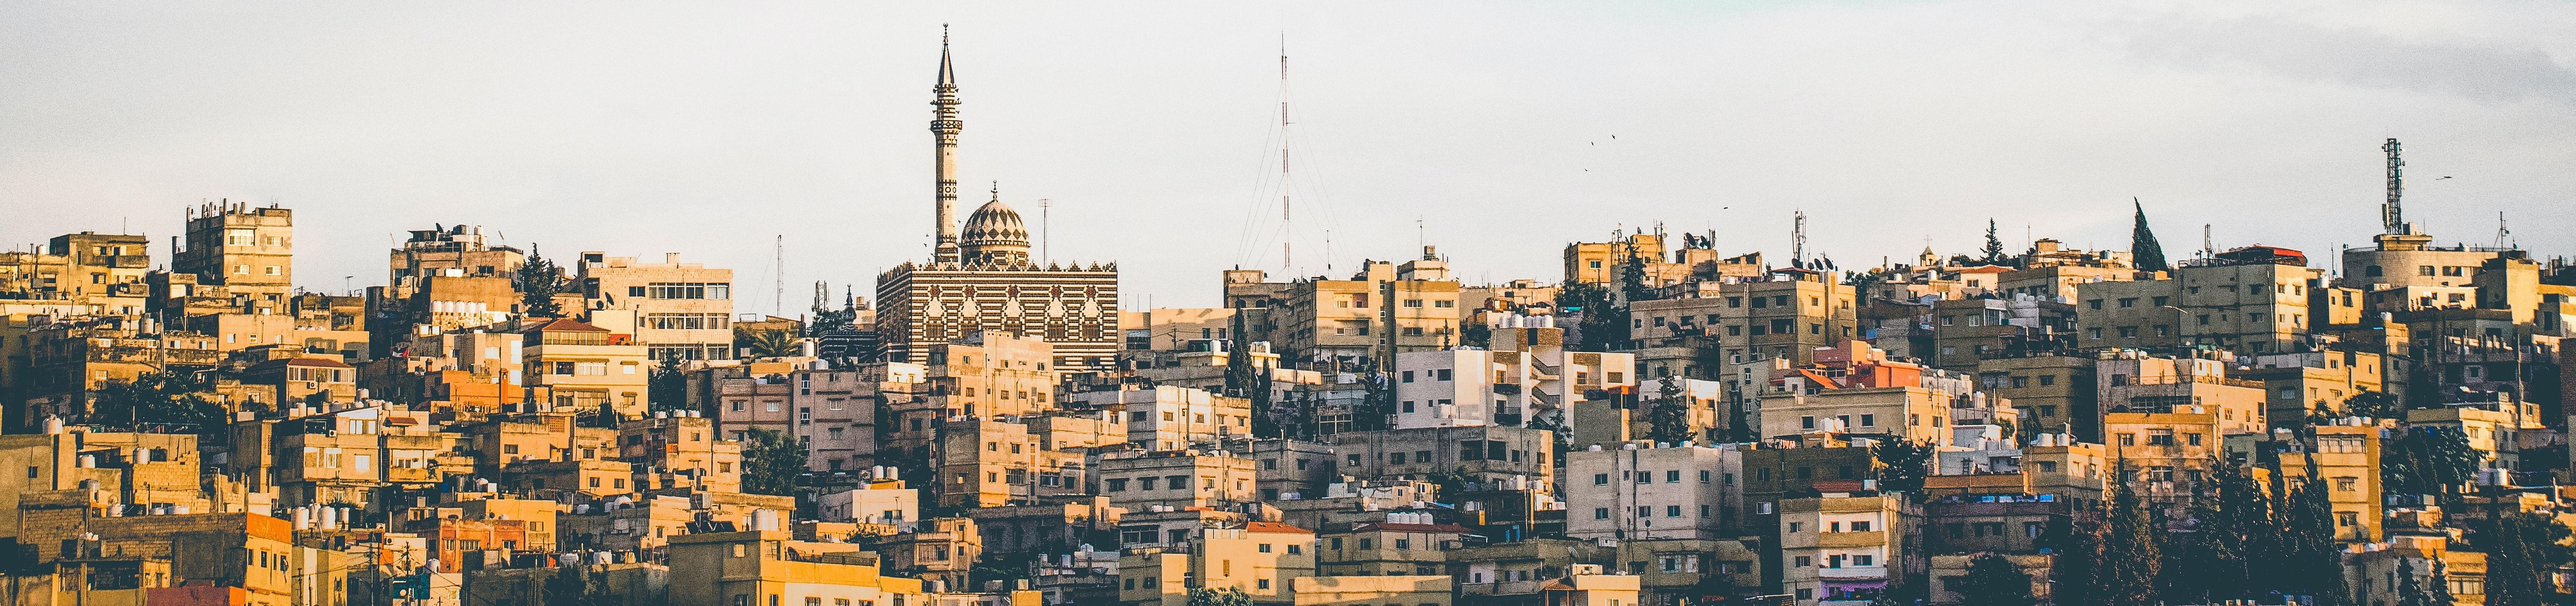 City View of Amman, Jordan